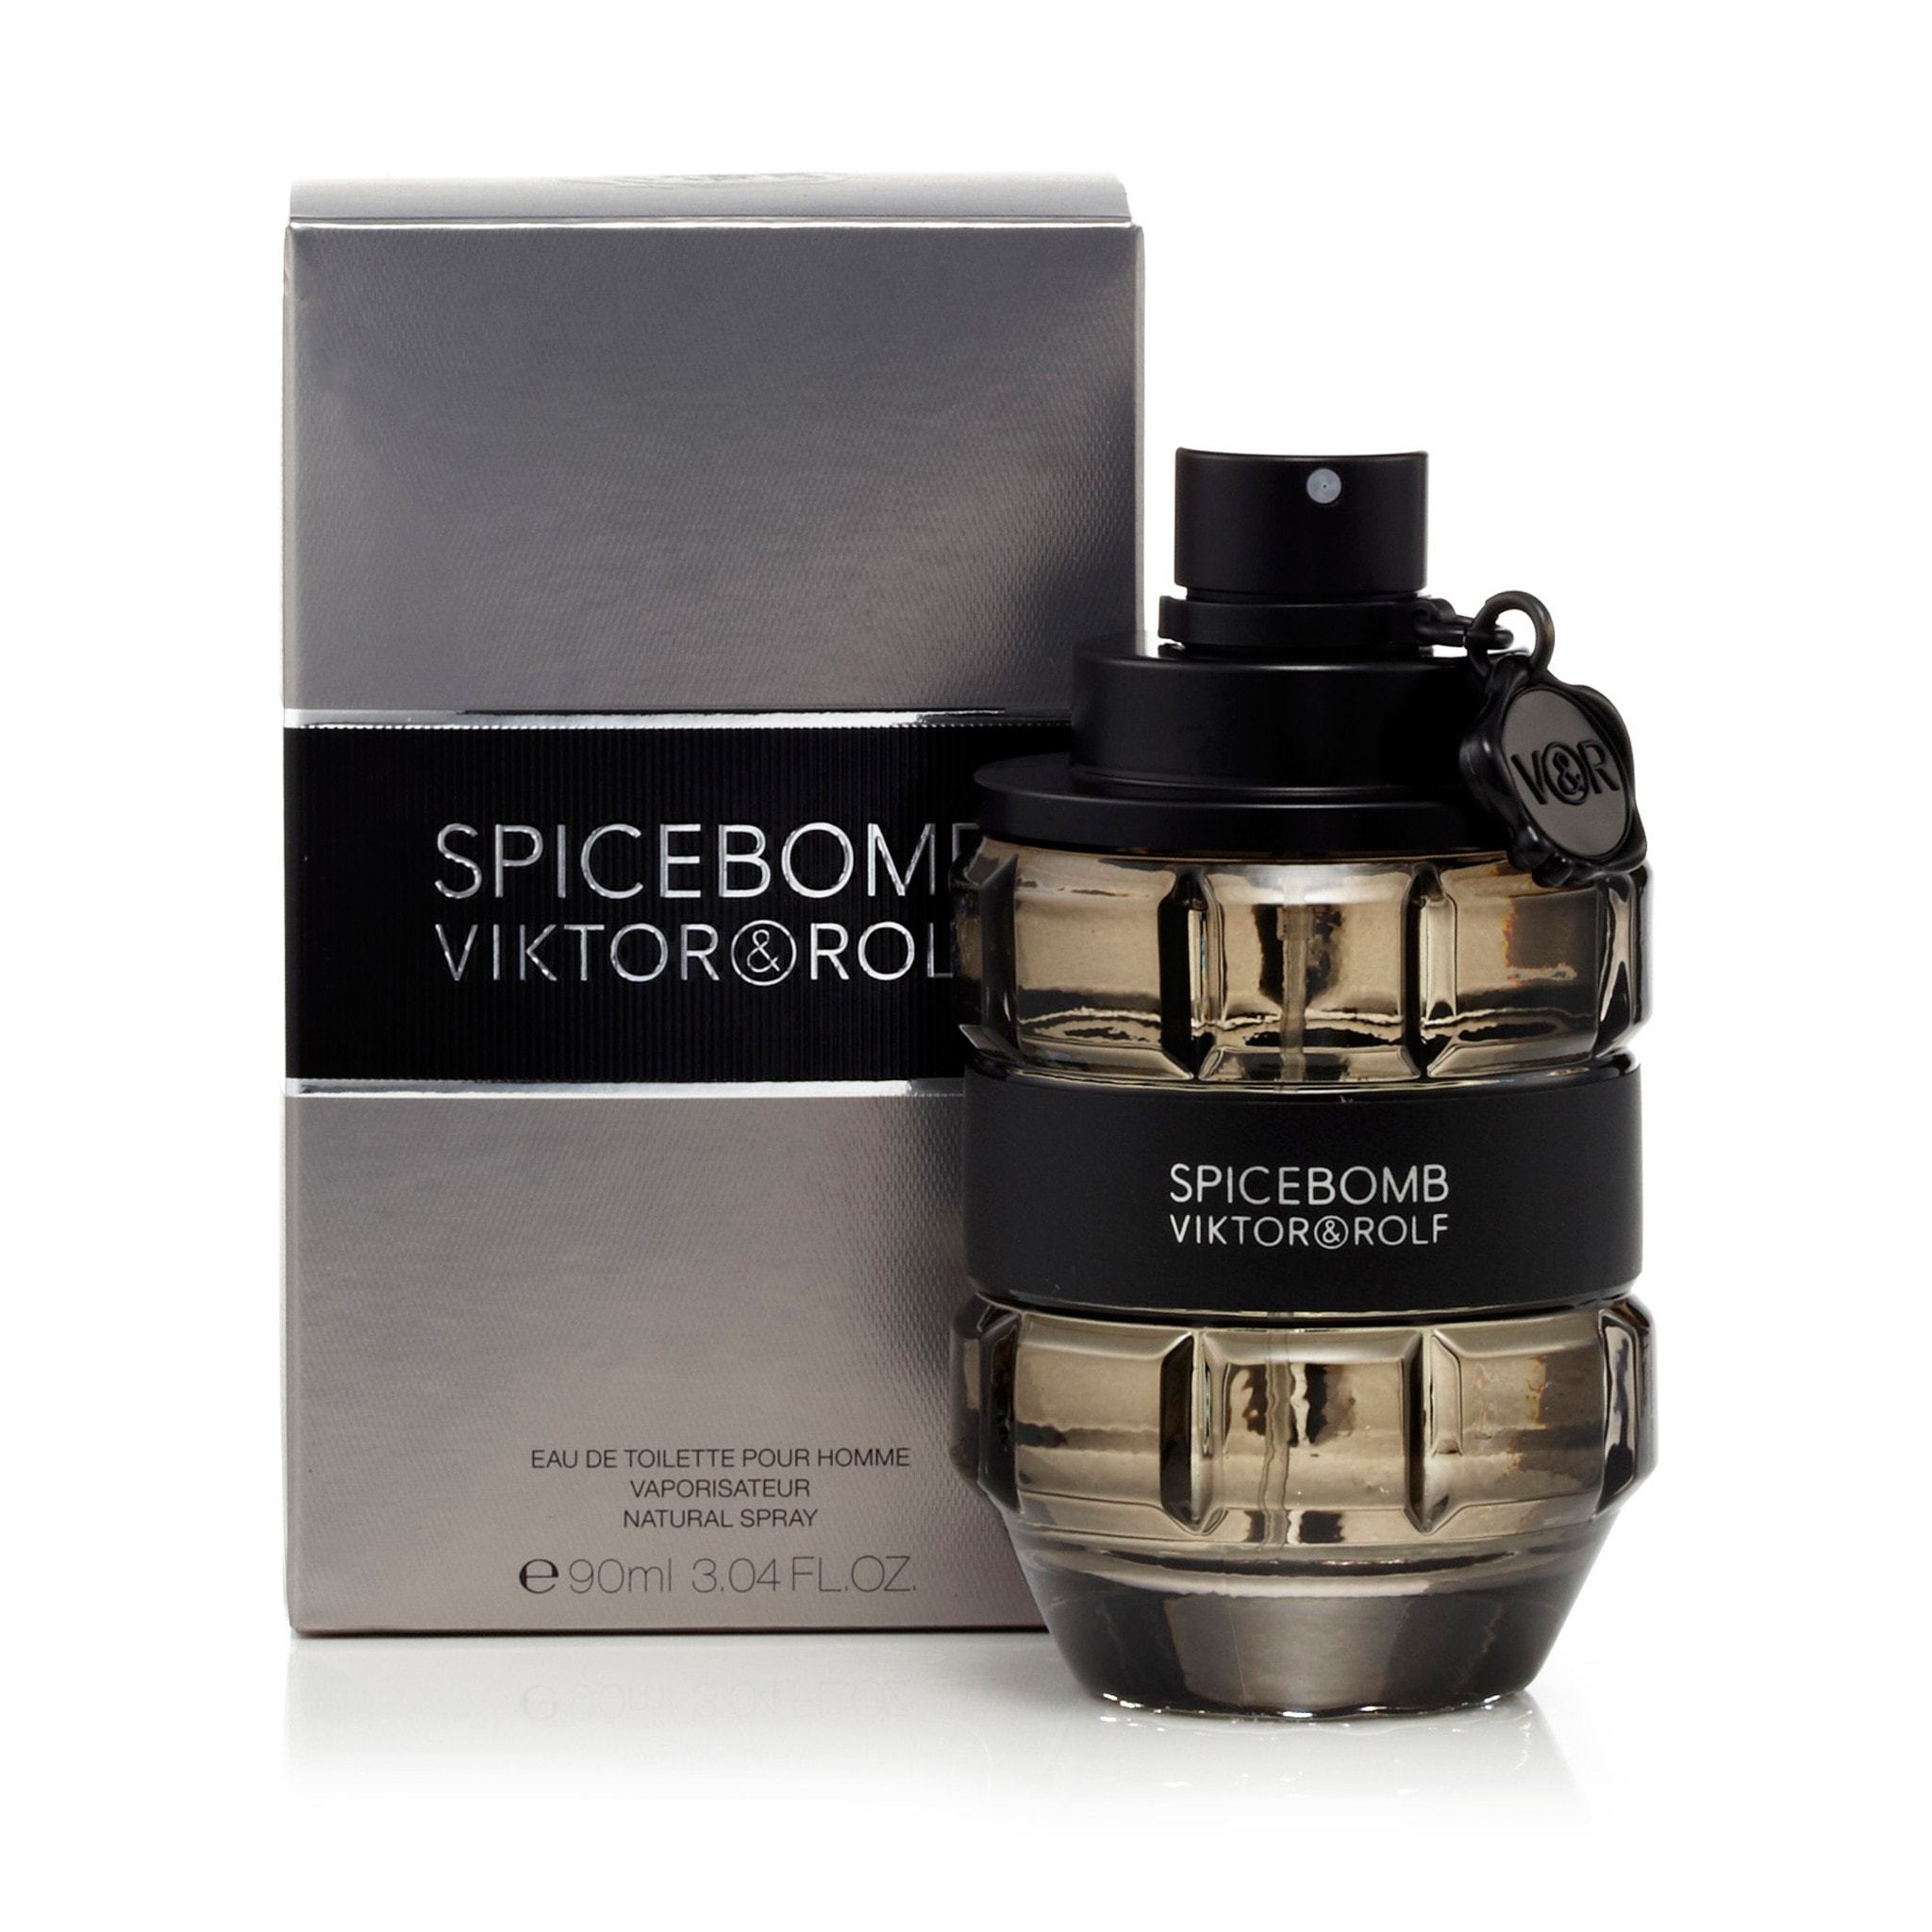 Spicebomb Extreme by Viktor & Rolf 1.7 oz Eau de Parfum Spray / Men